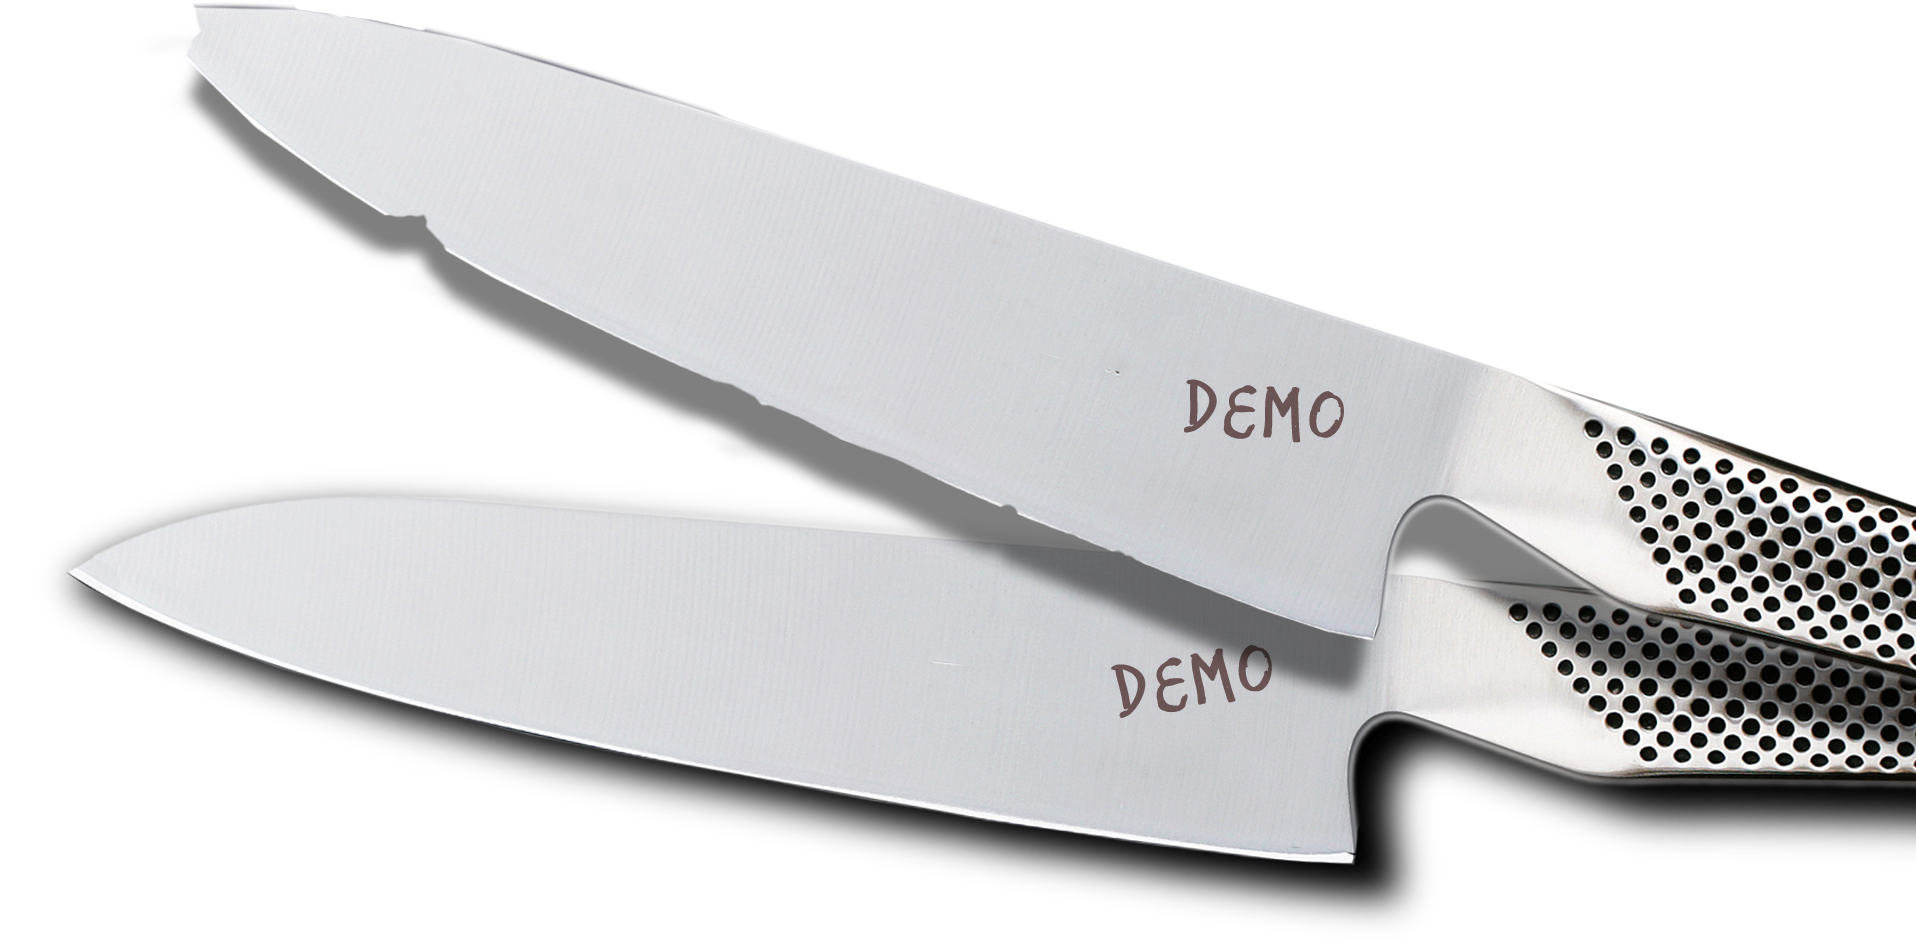 demo knives